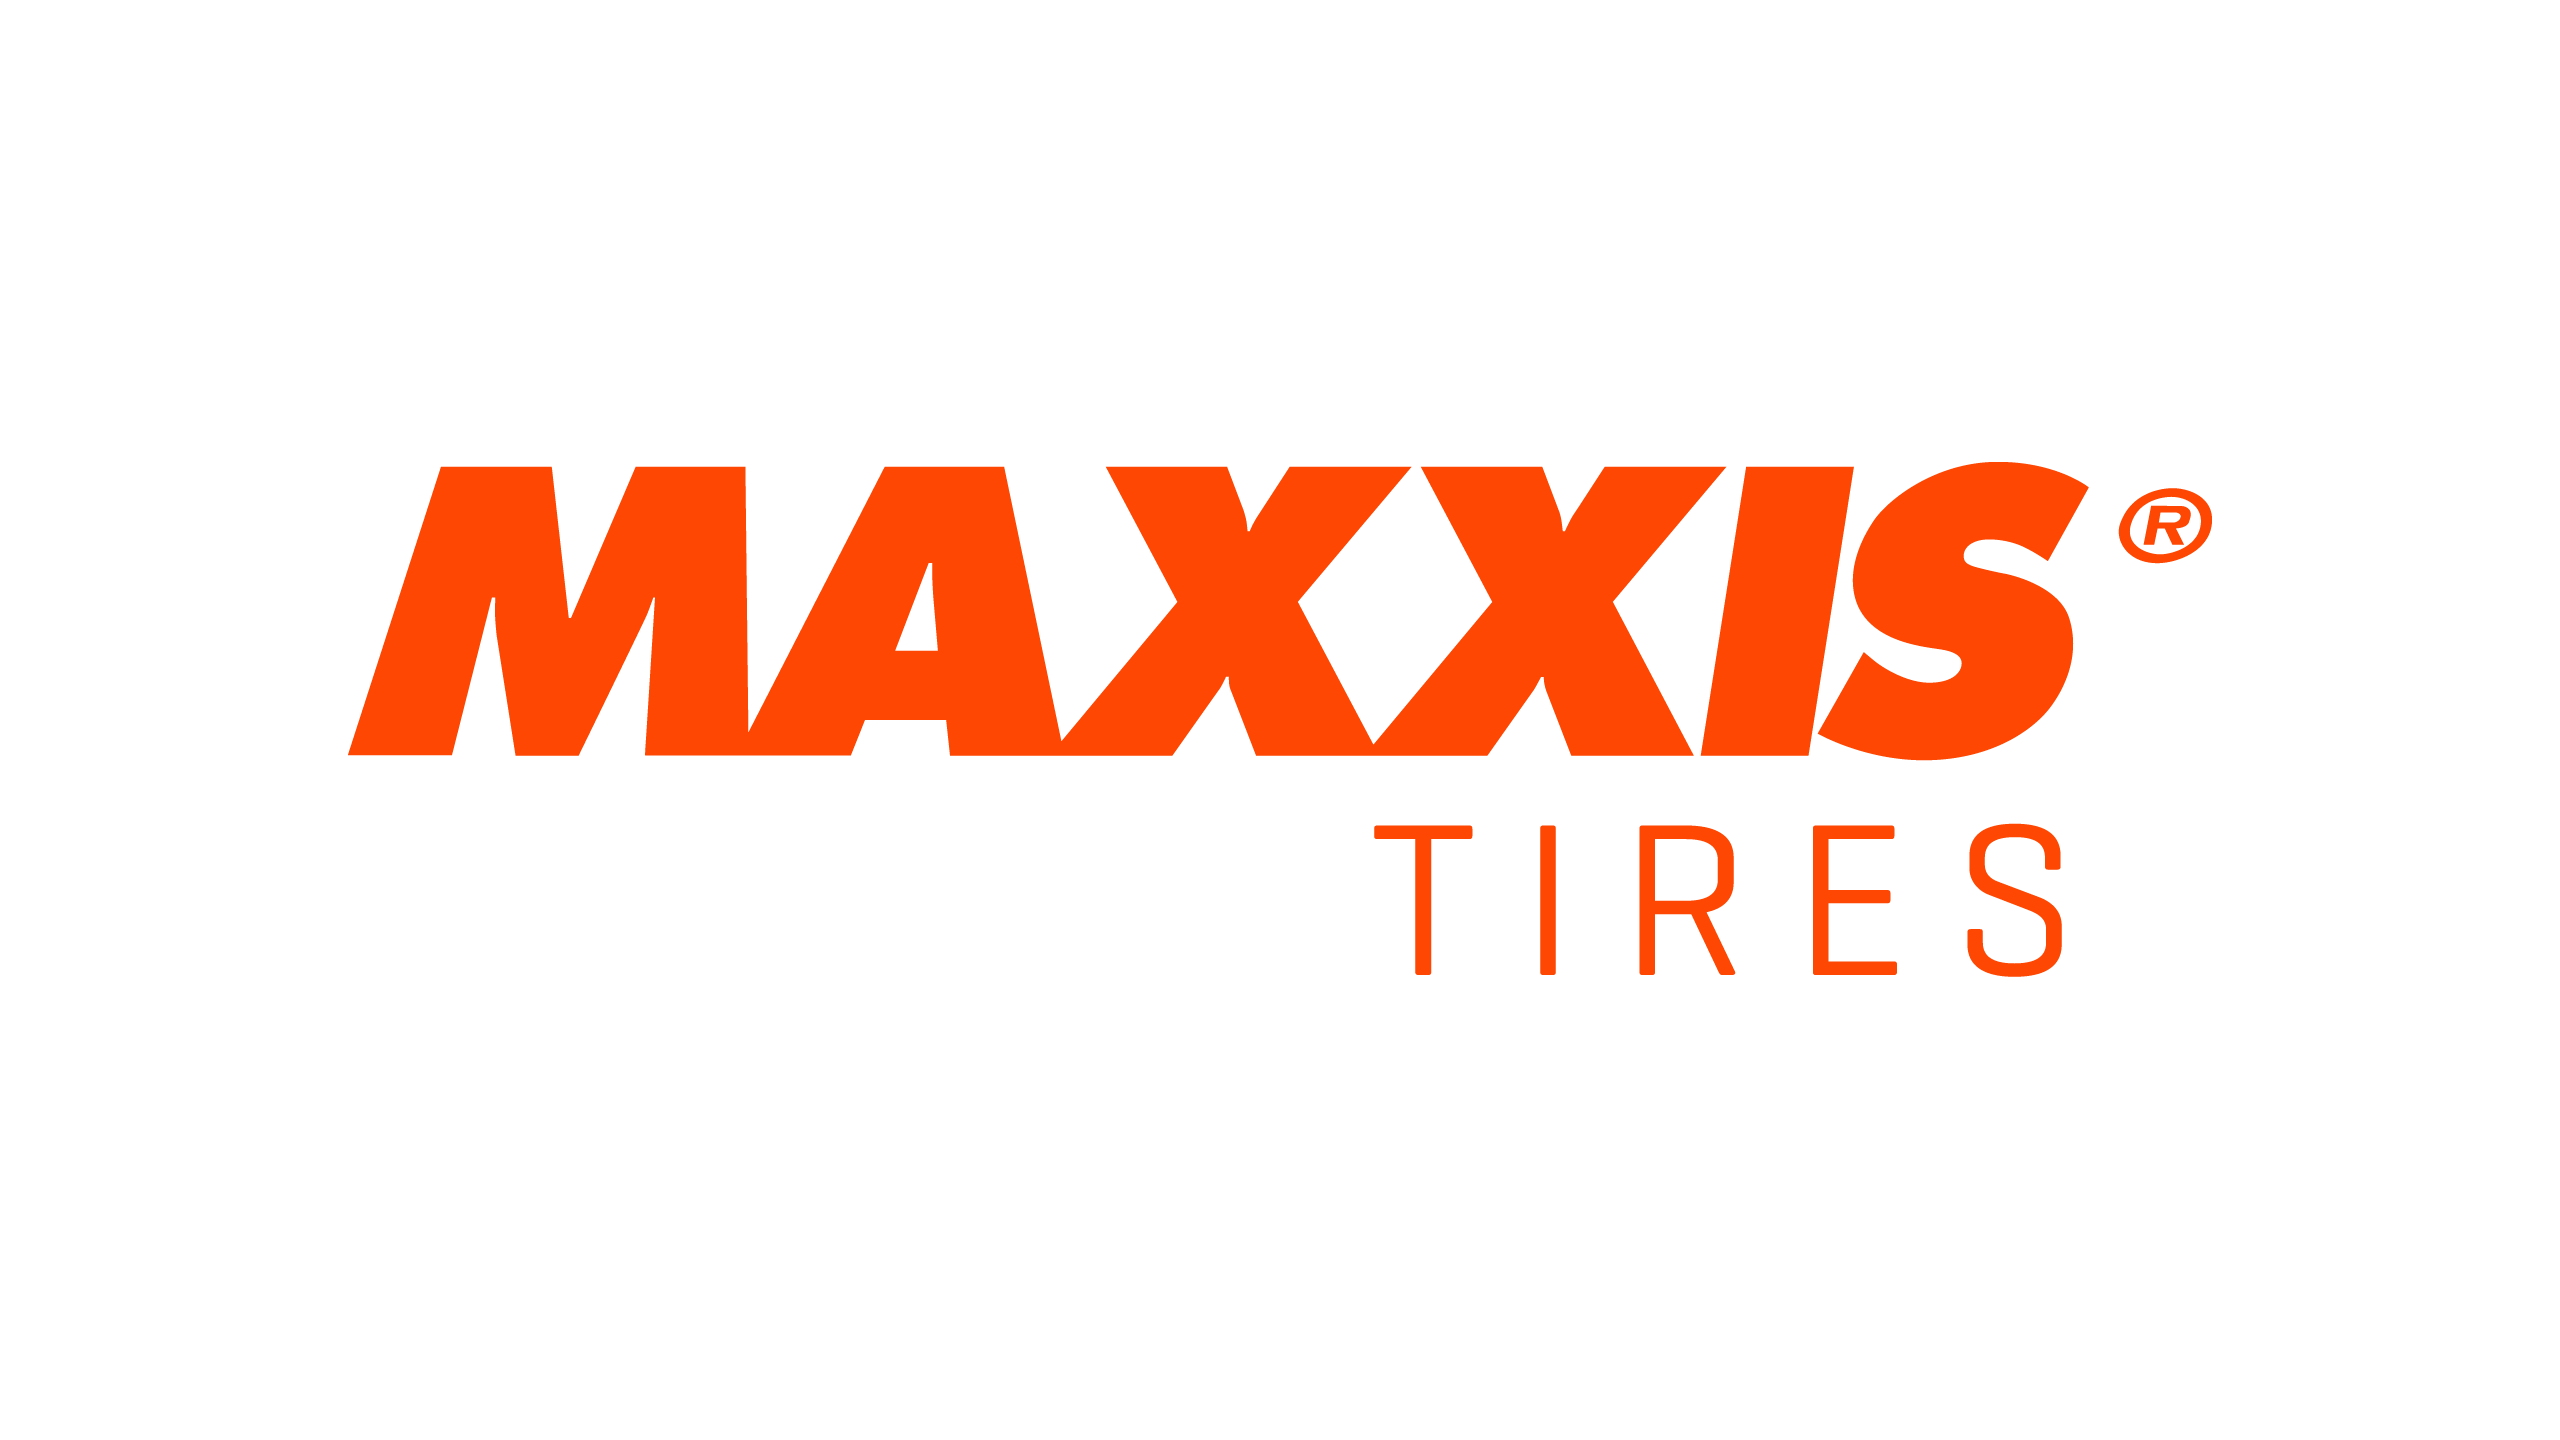 Maxxis International USA